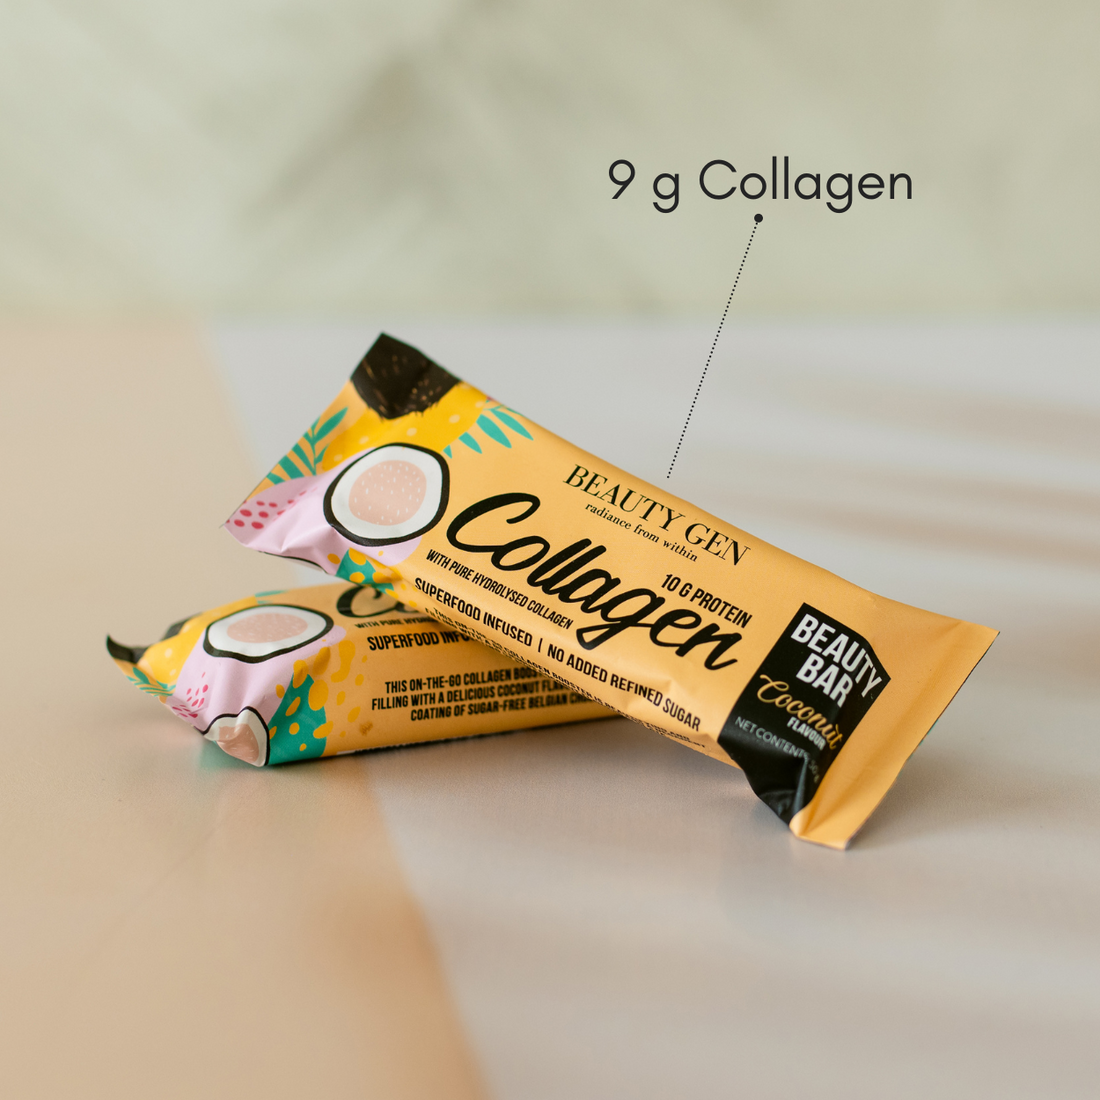 Collagen Beauty Bar Coconut - Box